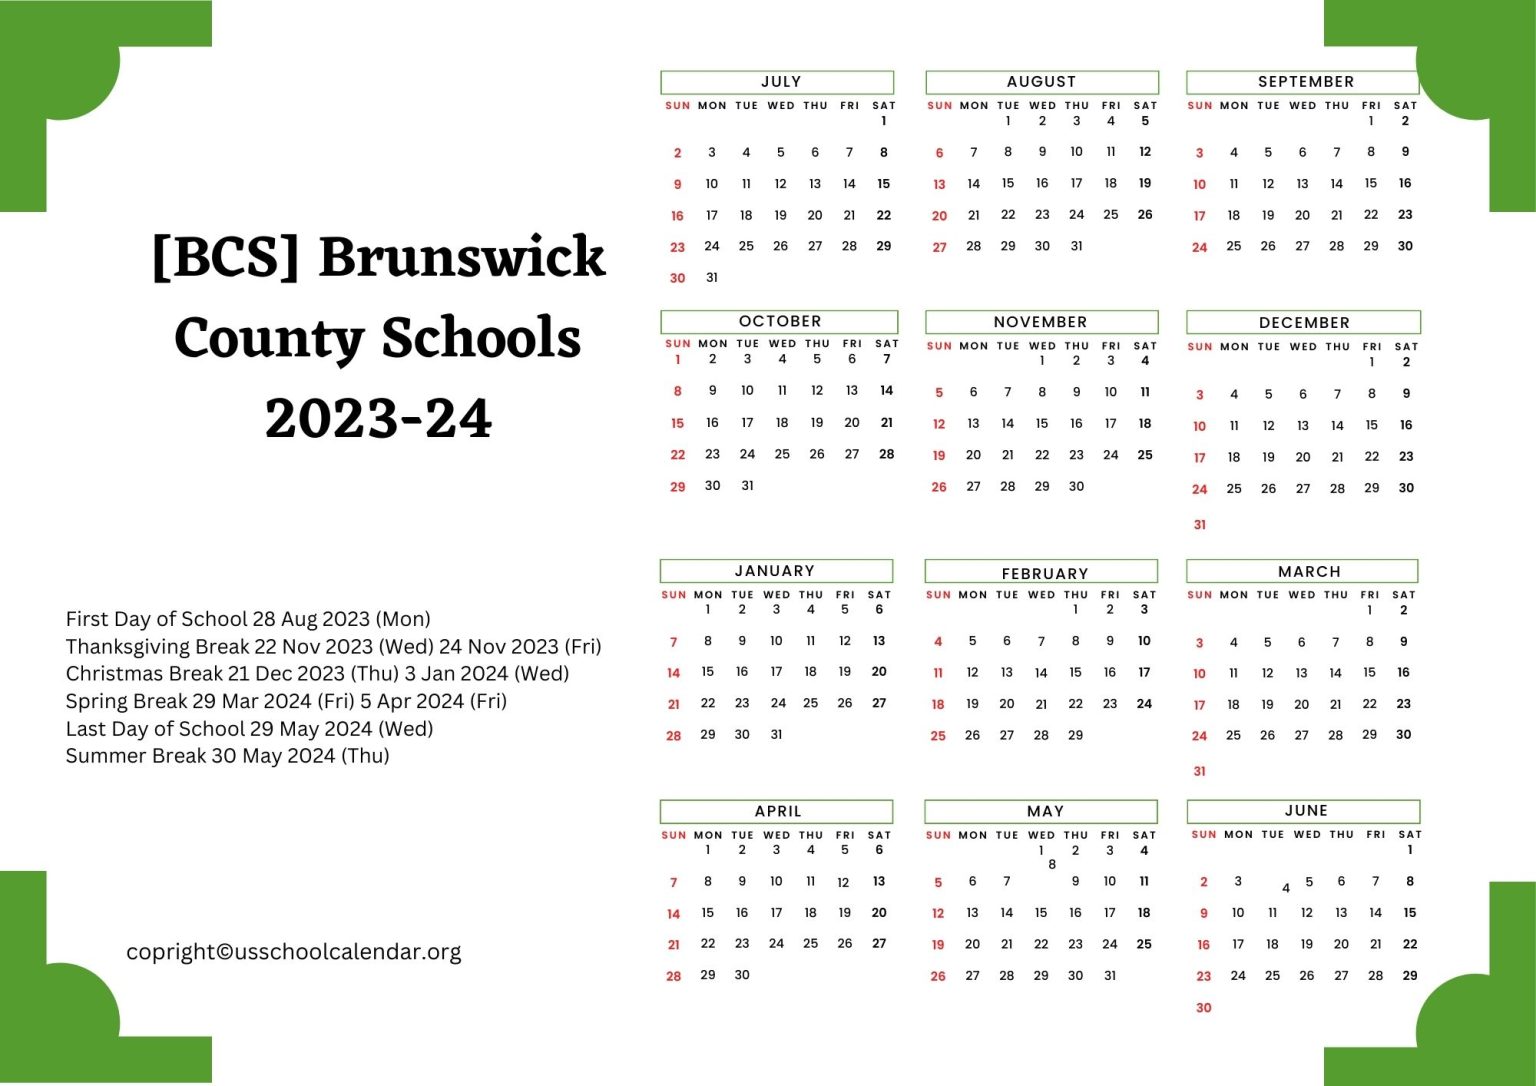 bcs-brunswick-county-schools-calendar-holidays-2023-2024